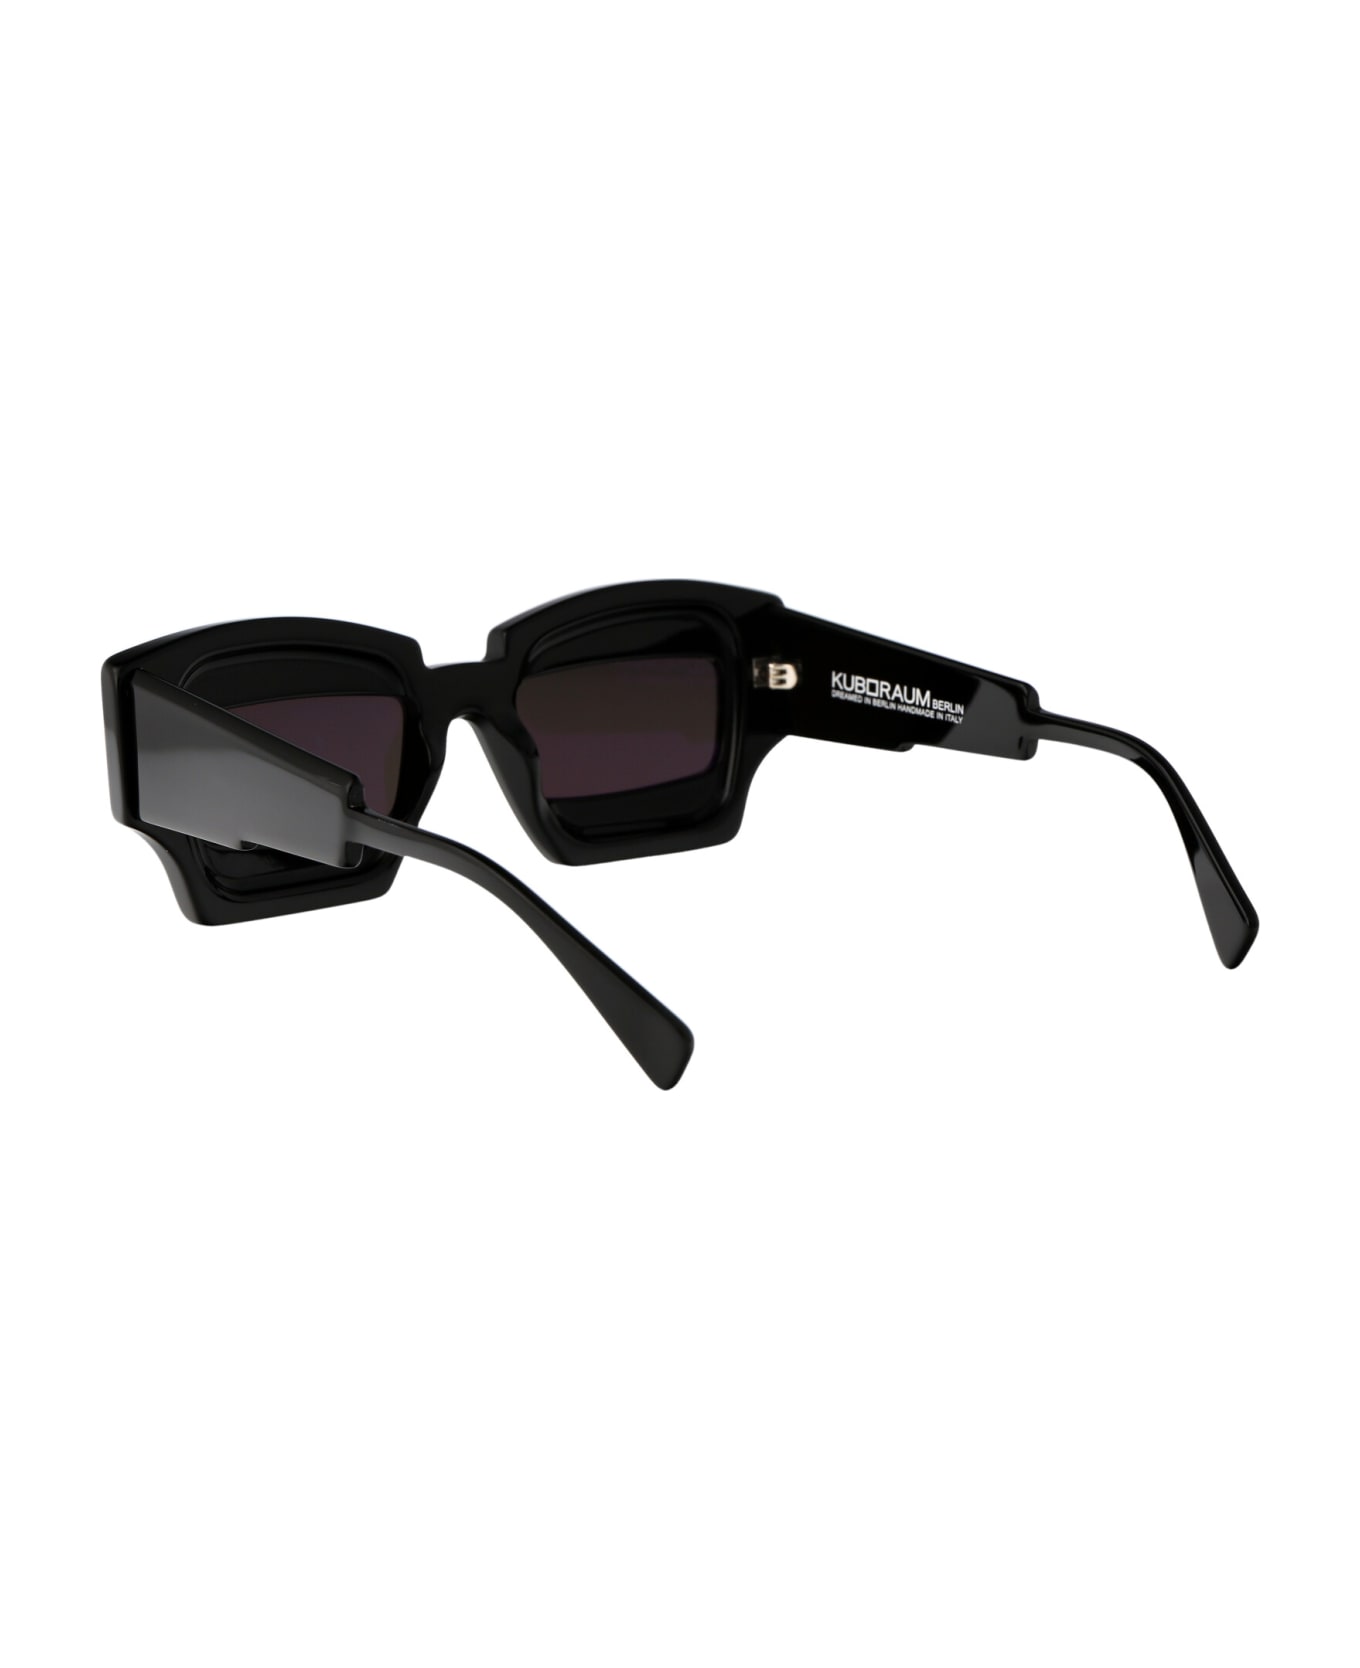 Kuboraum Maske X6 Sunglasses - BS dark brown